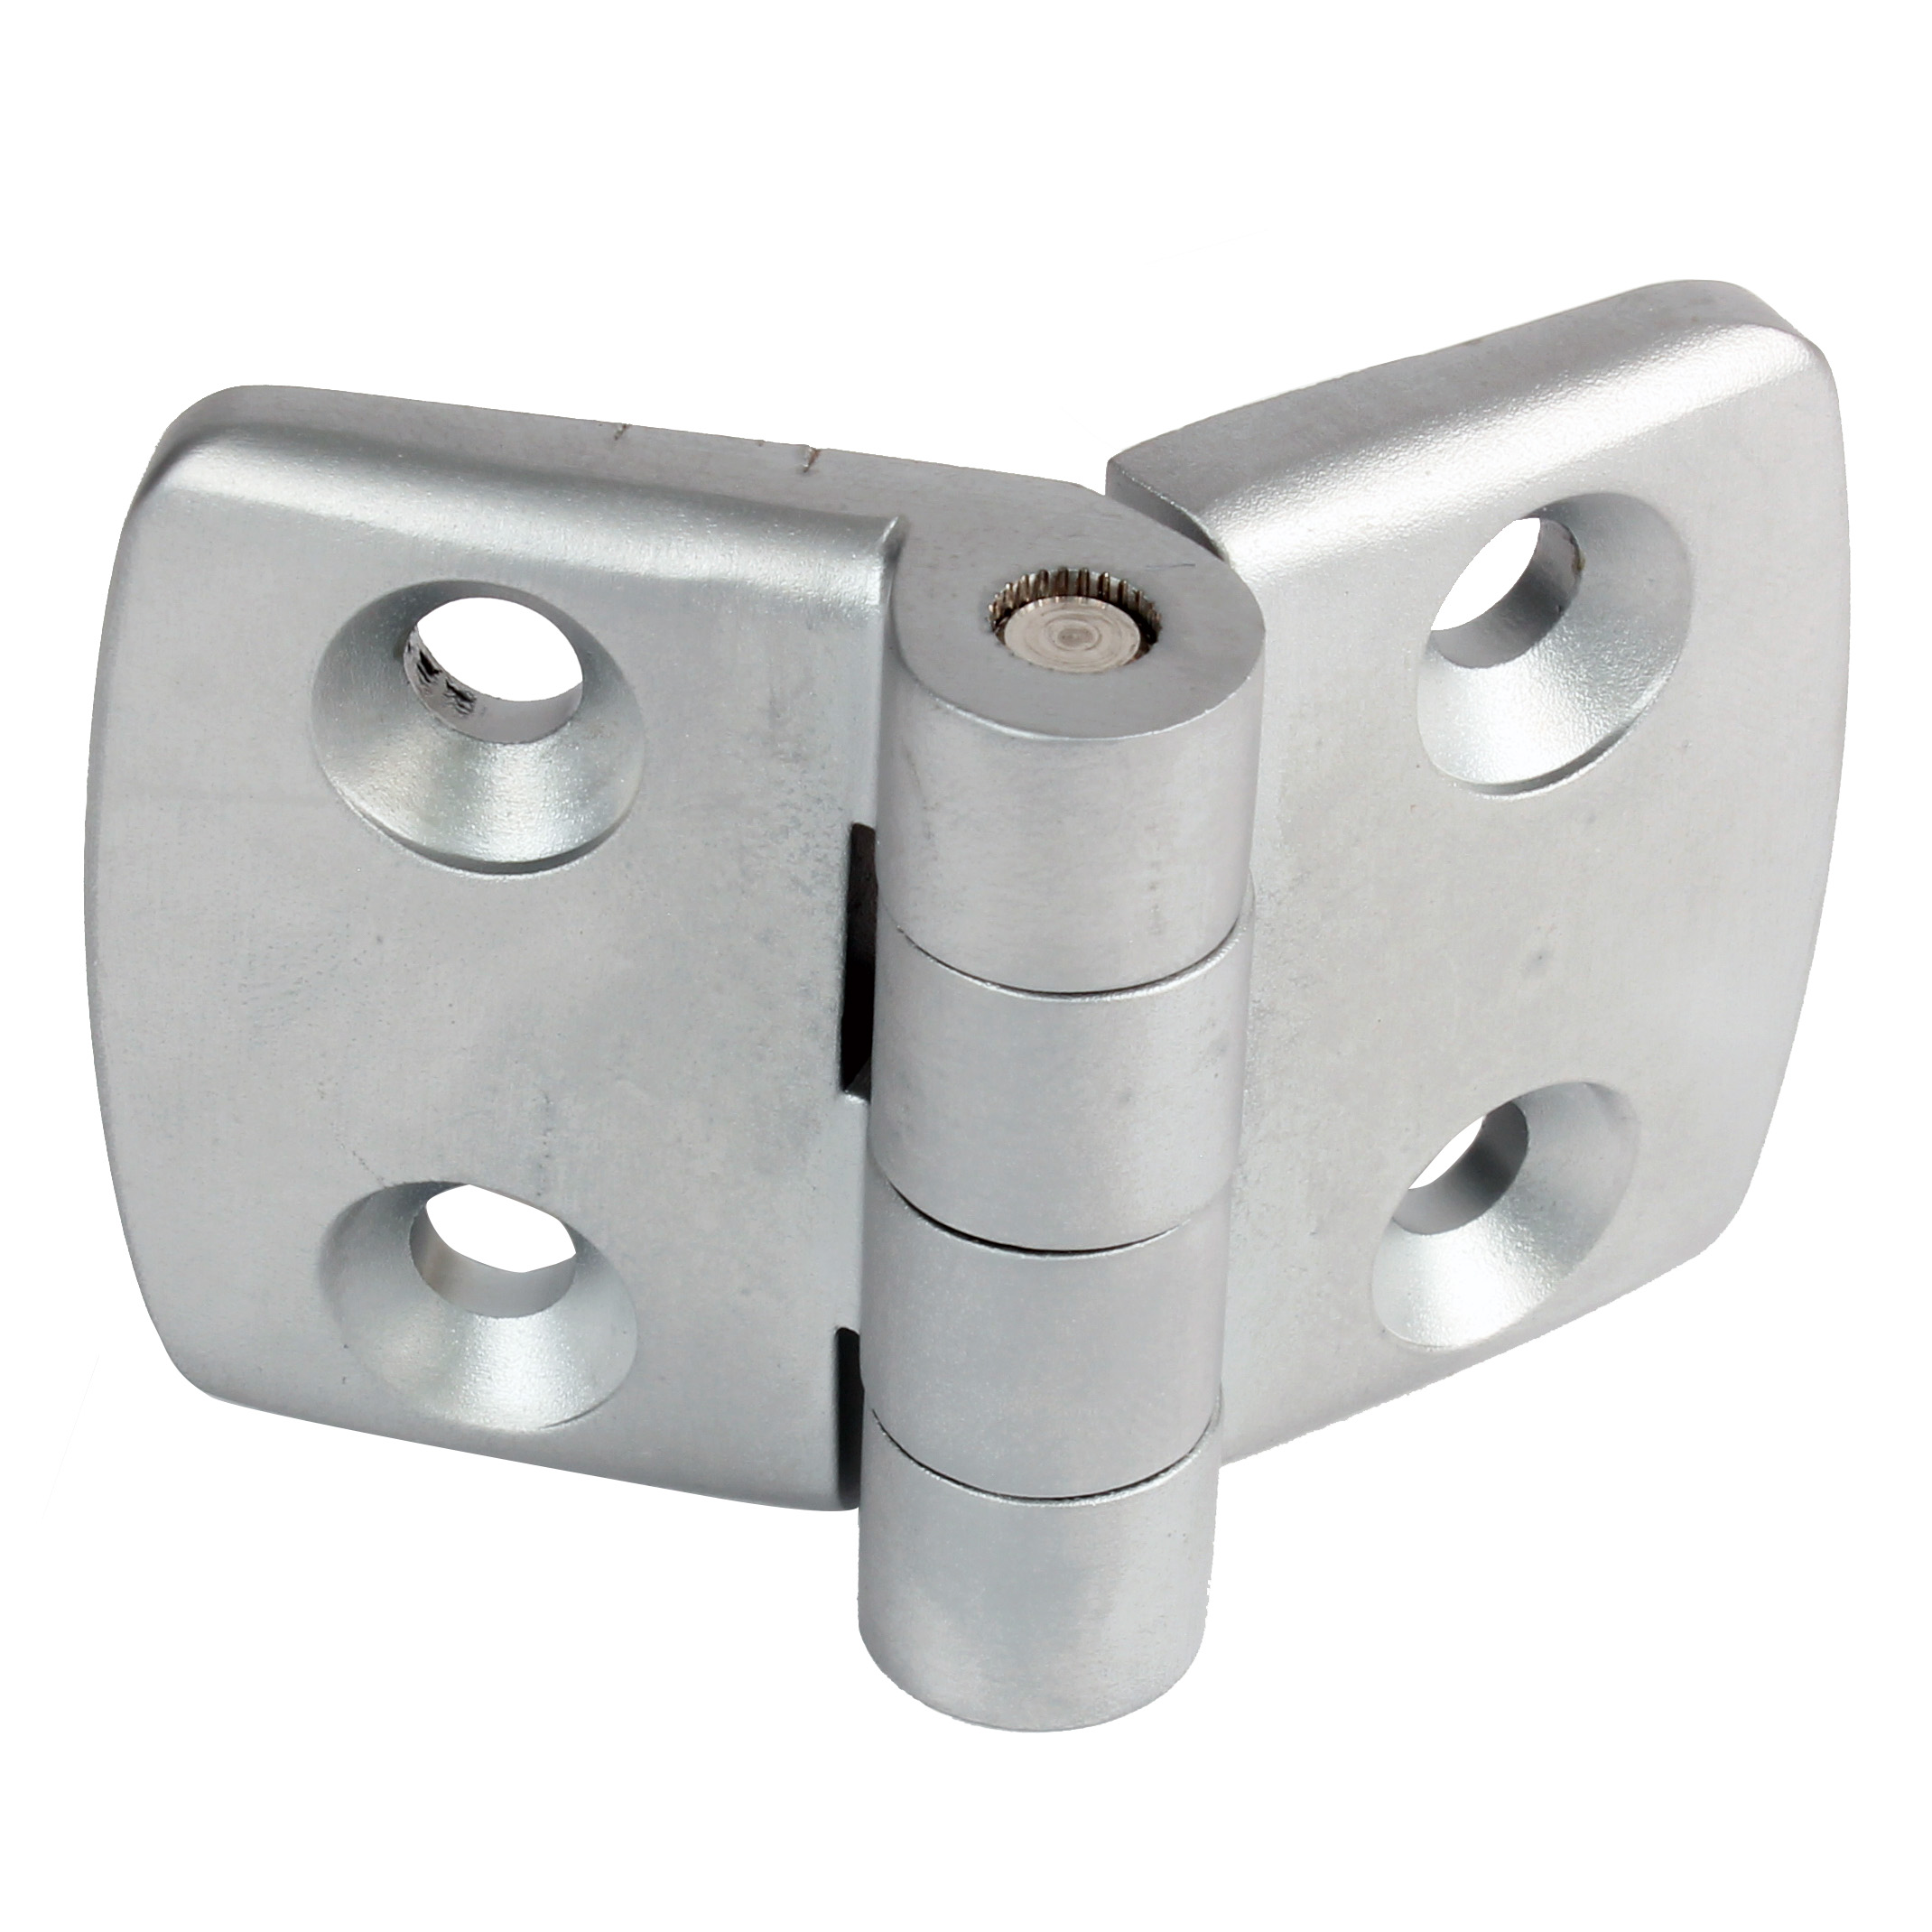 Hinge for aluminium profile - Hinge - Stainless steel - 